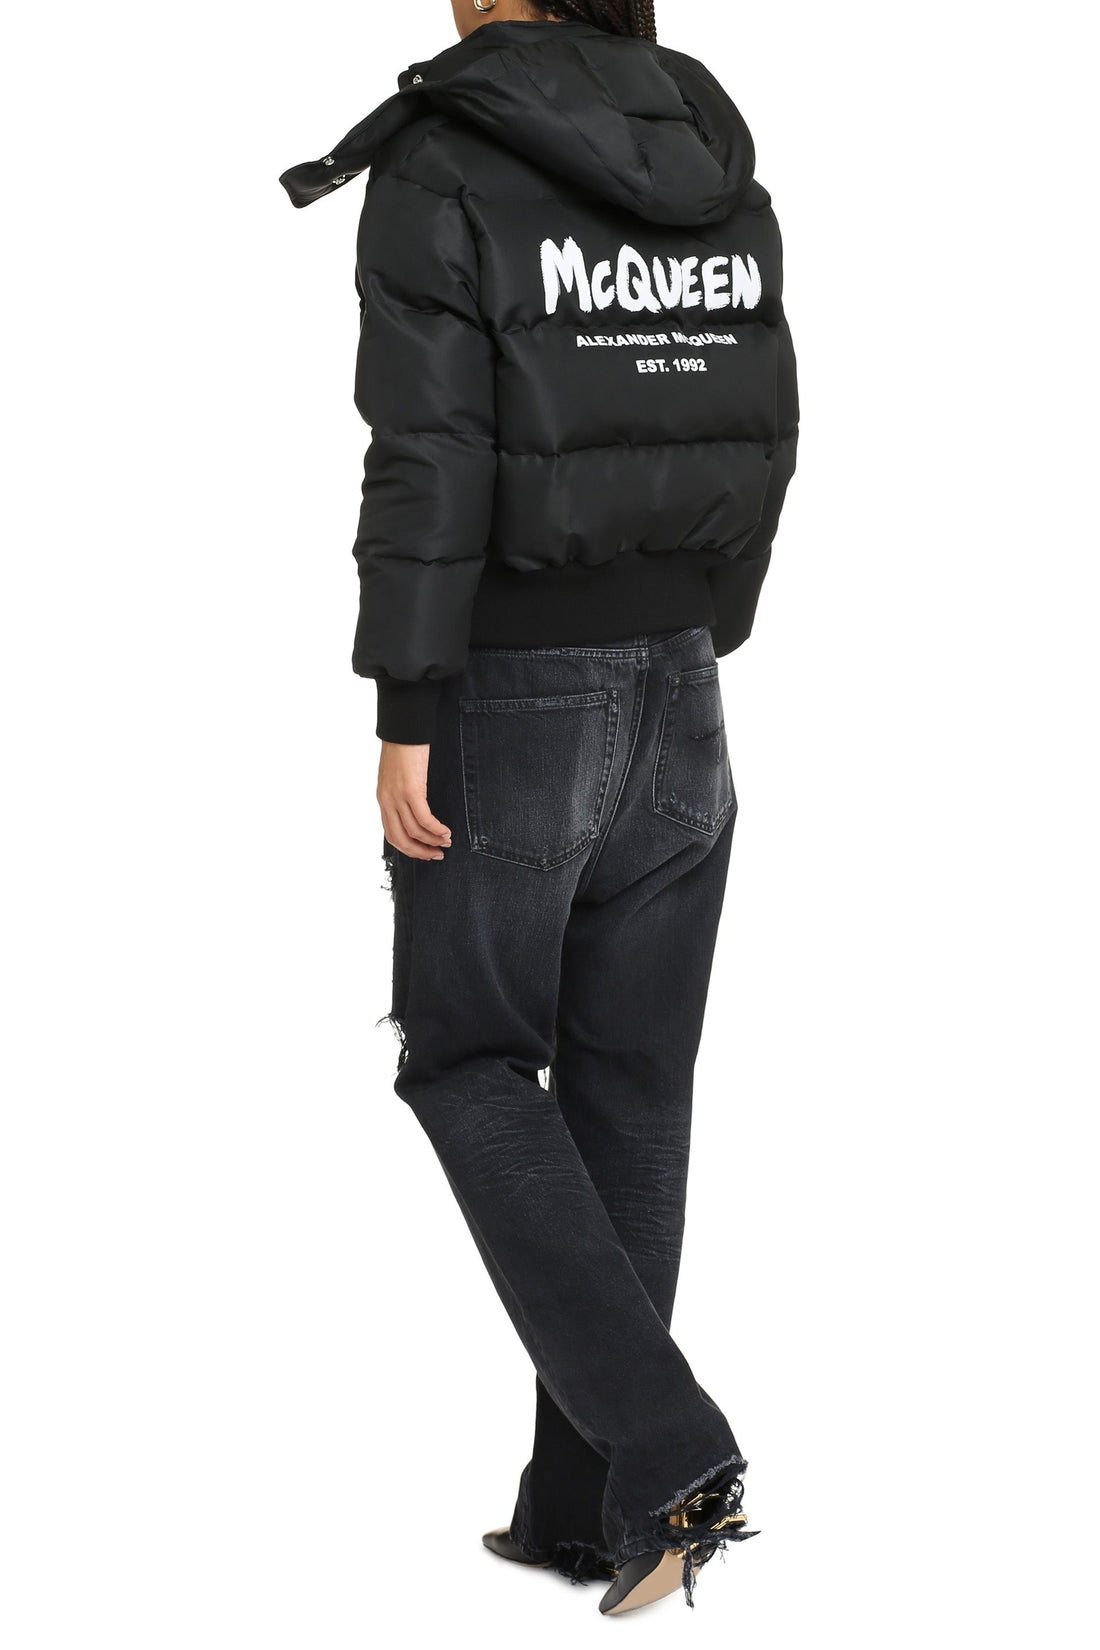 Alexander McQueen-OUTLET-SALE-Hooded down jacket-ARCHIVIST